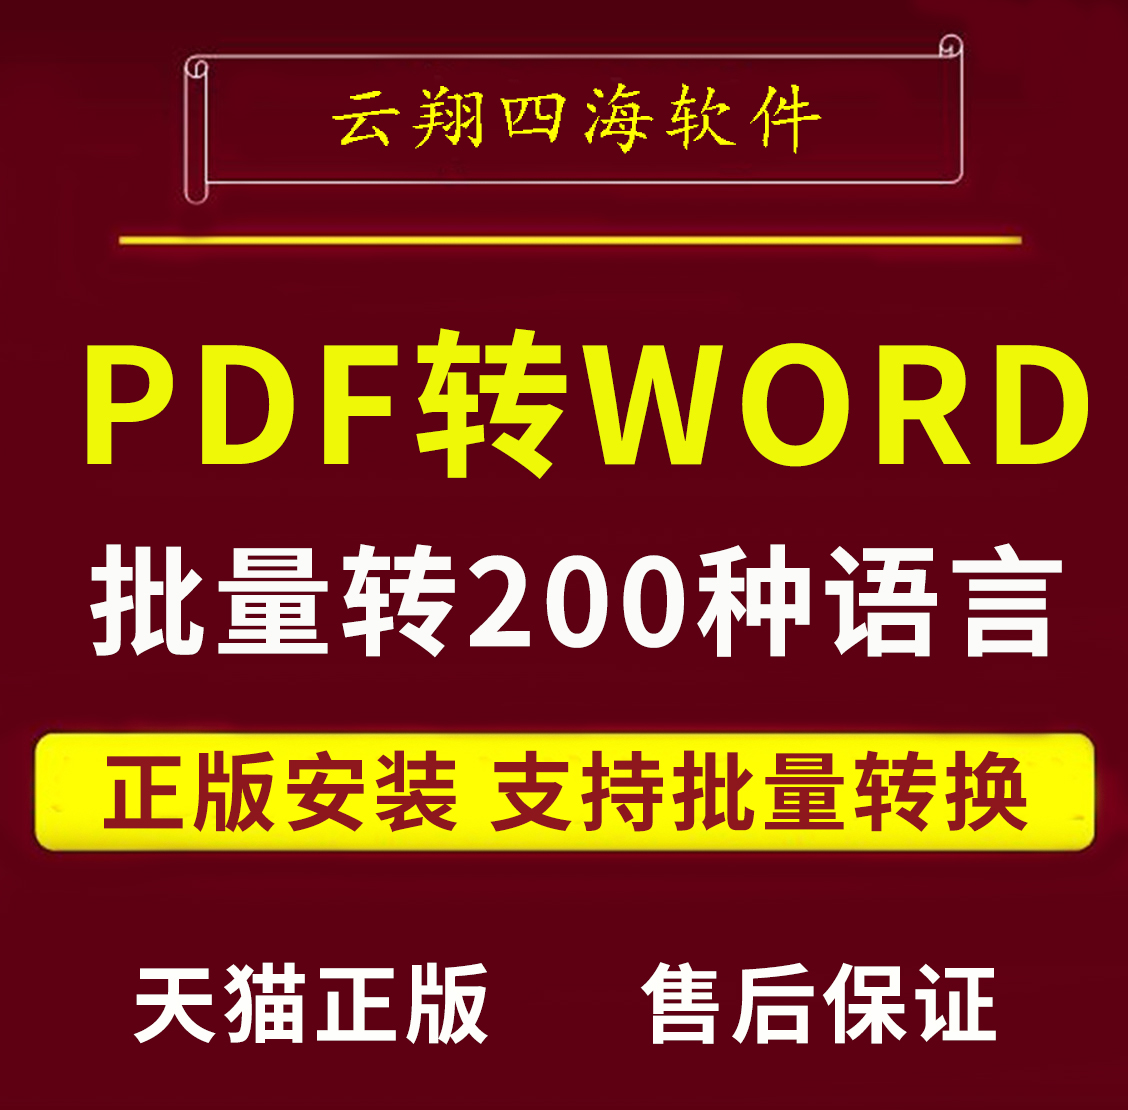 pdf转换成word软件图片转wordtxt pdf转换器PDF转word pdf编辑OCR